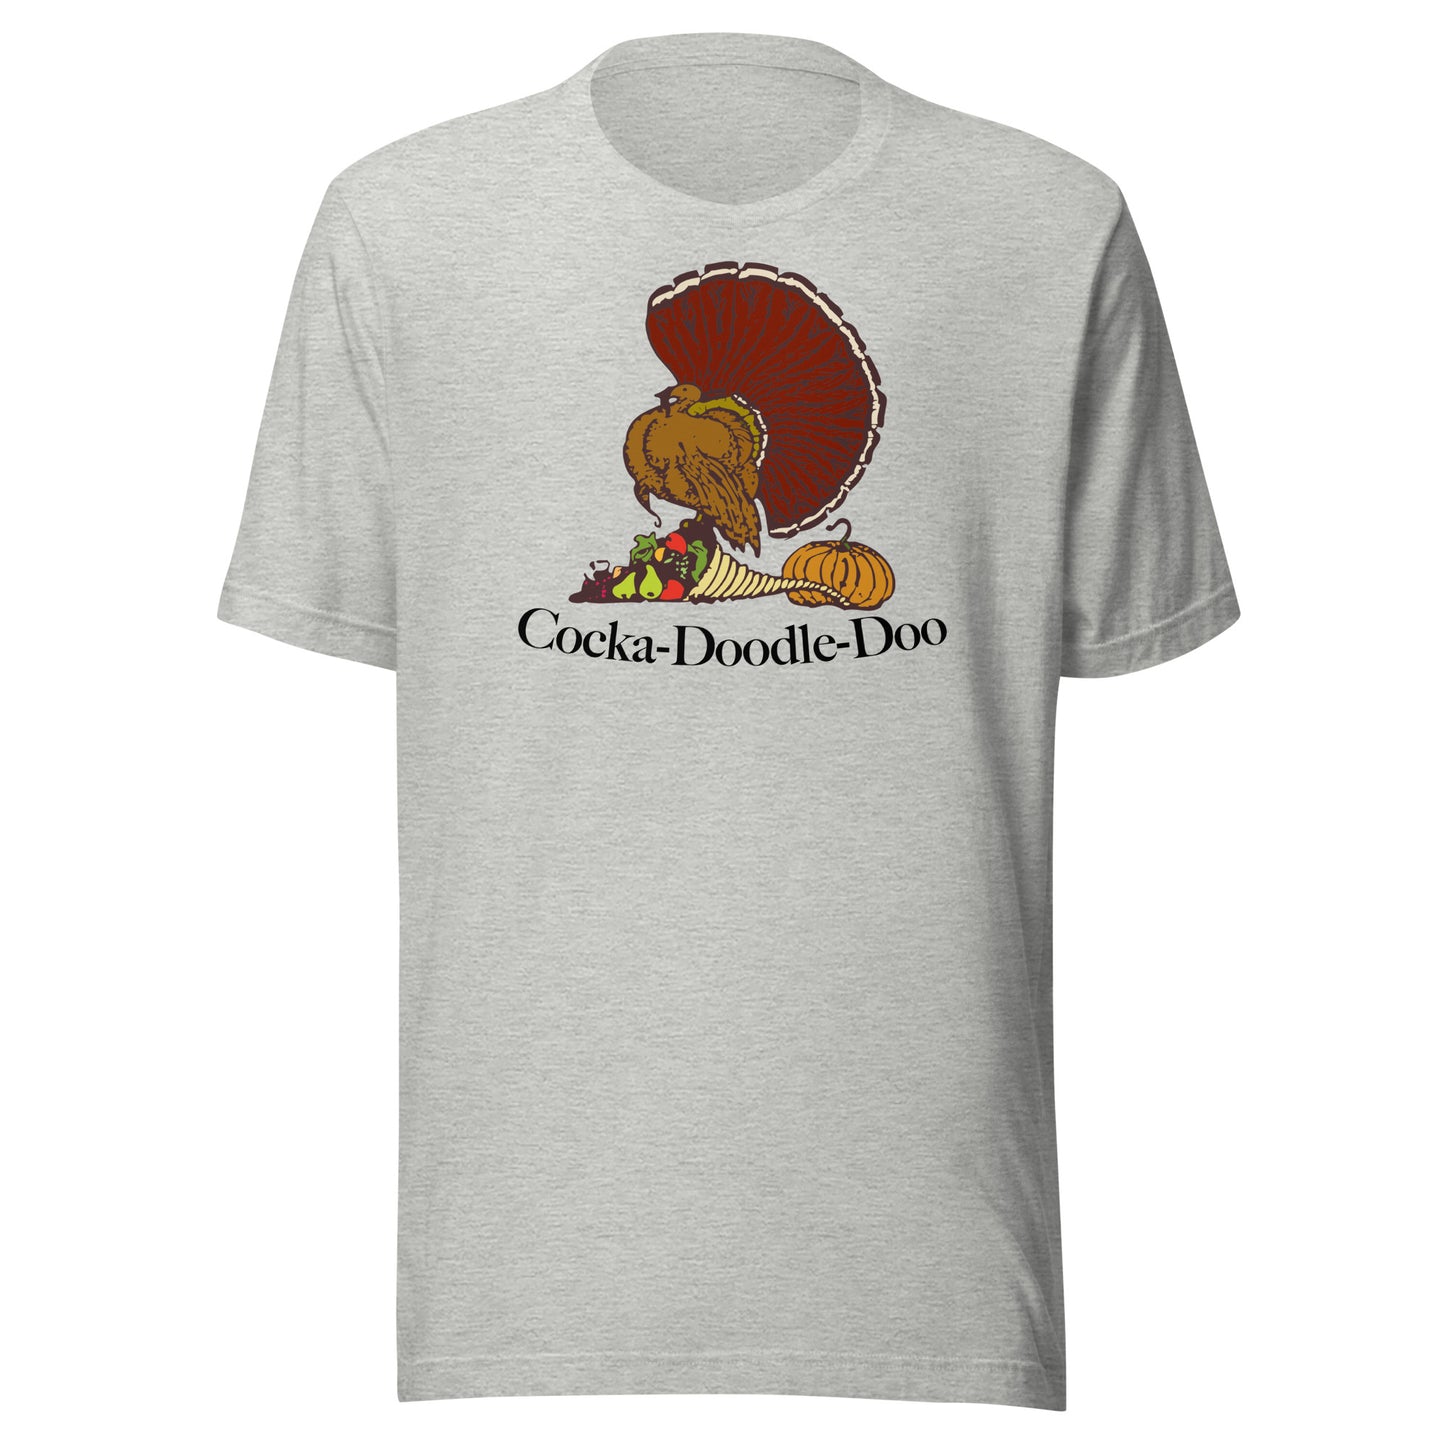 Cocka-Doodle-Doo Shirt